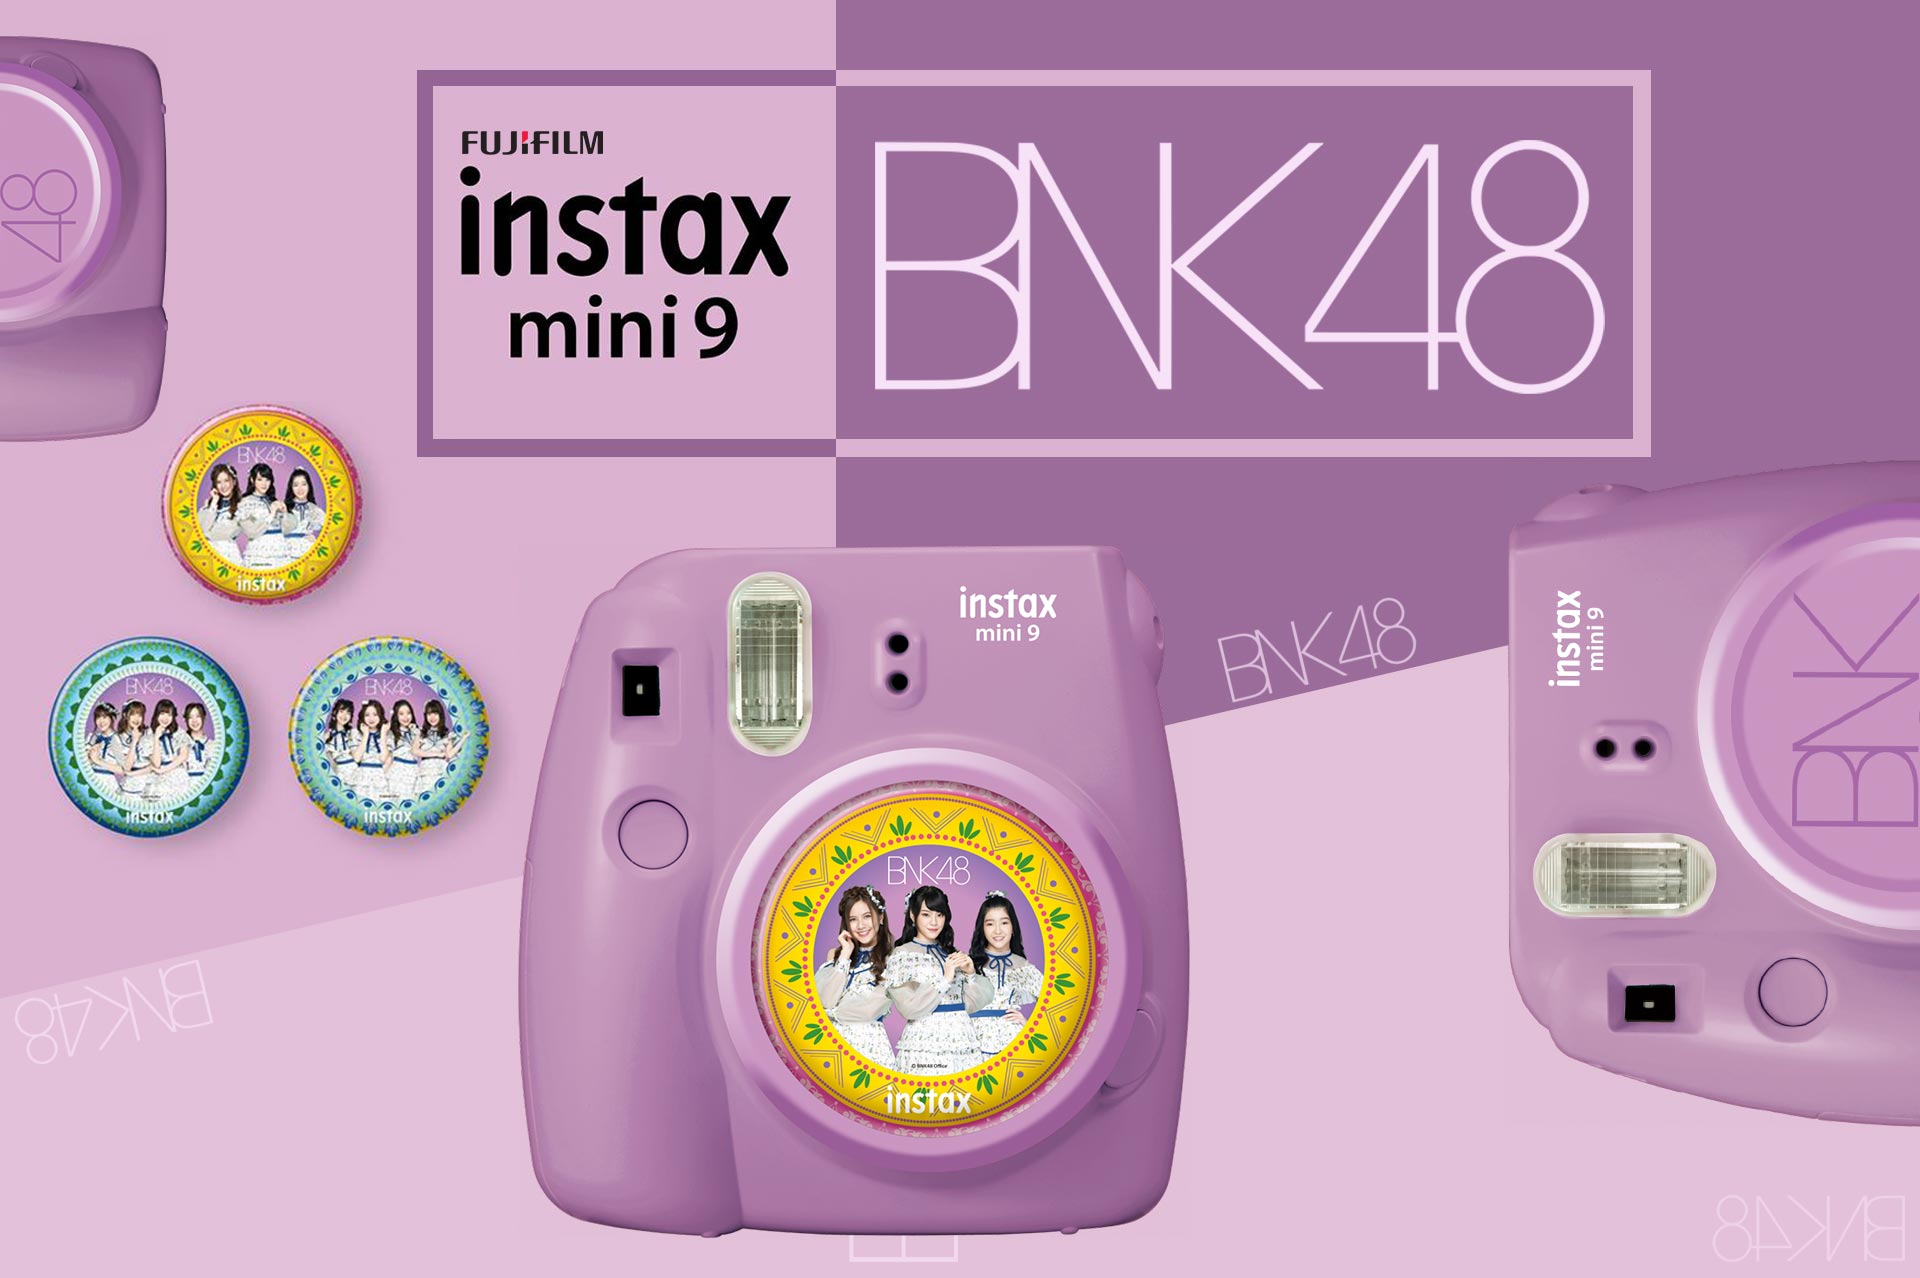 Fujifilm Instax  Mini 9 BNK 48 Edition